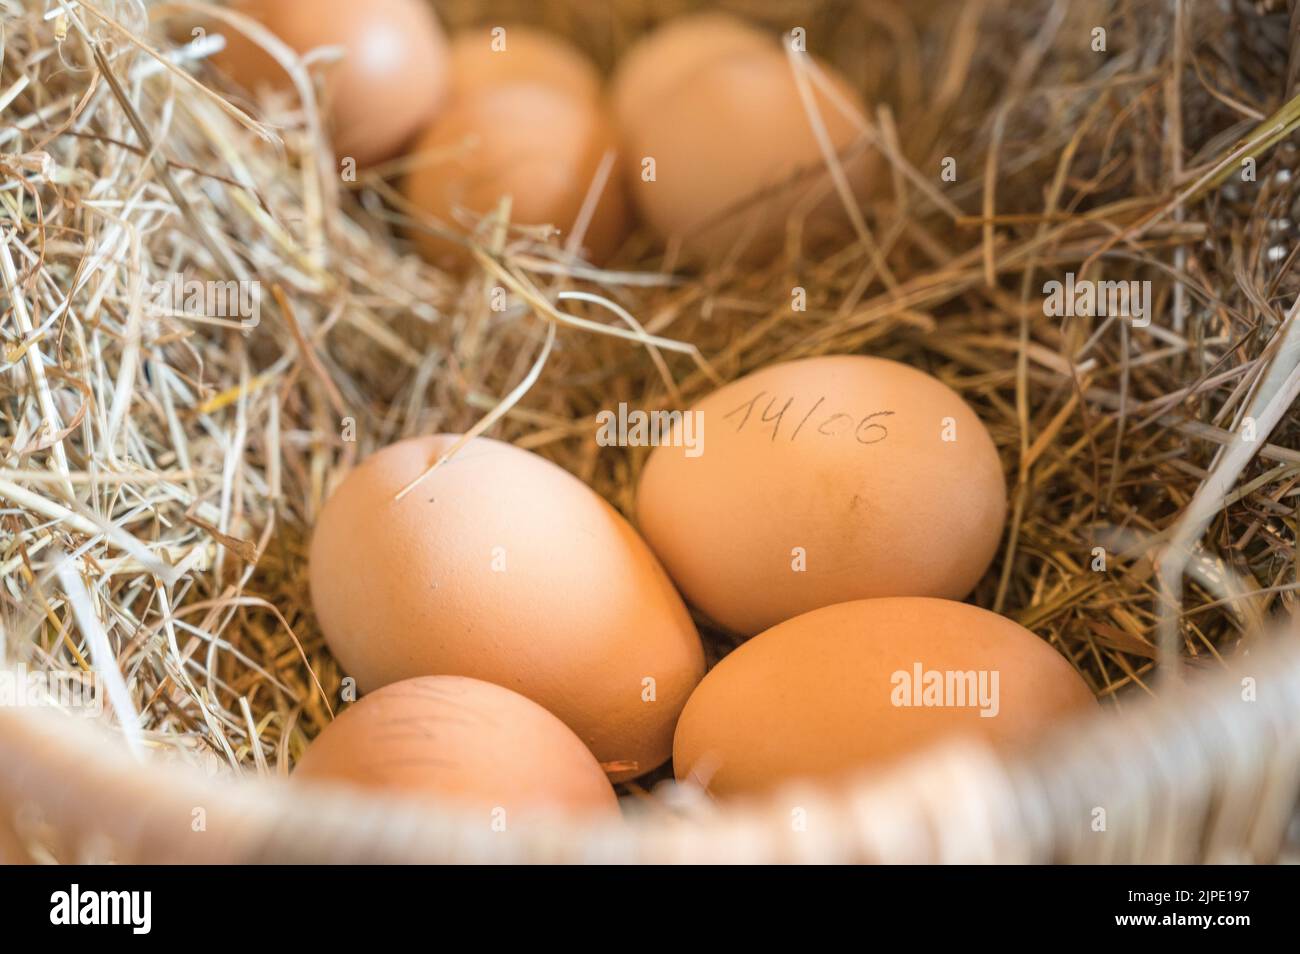 Fresh farm eggs sold by Château de Sully in Burgundy, France Stock Photo